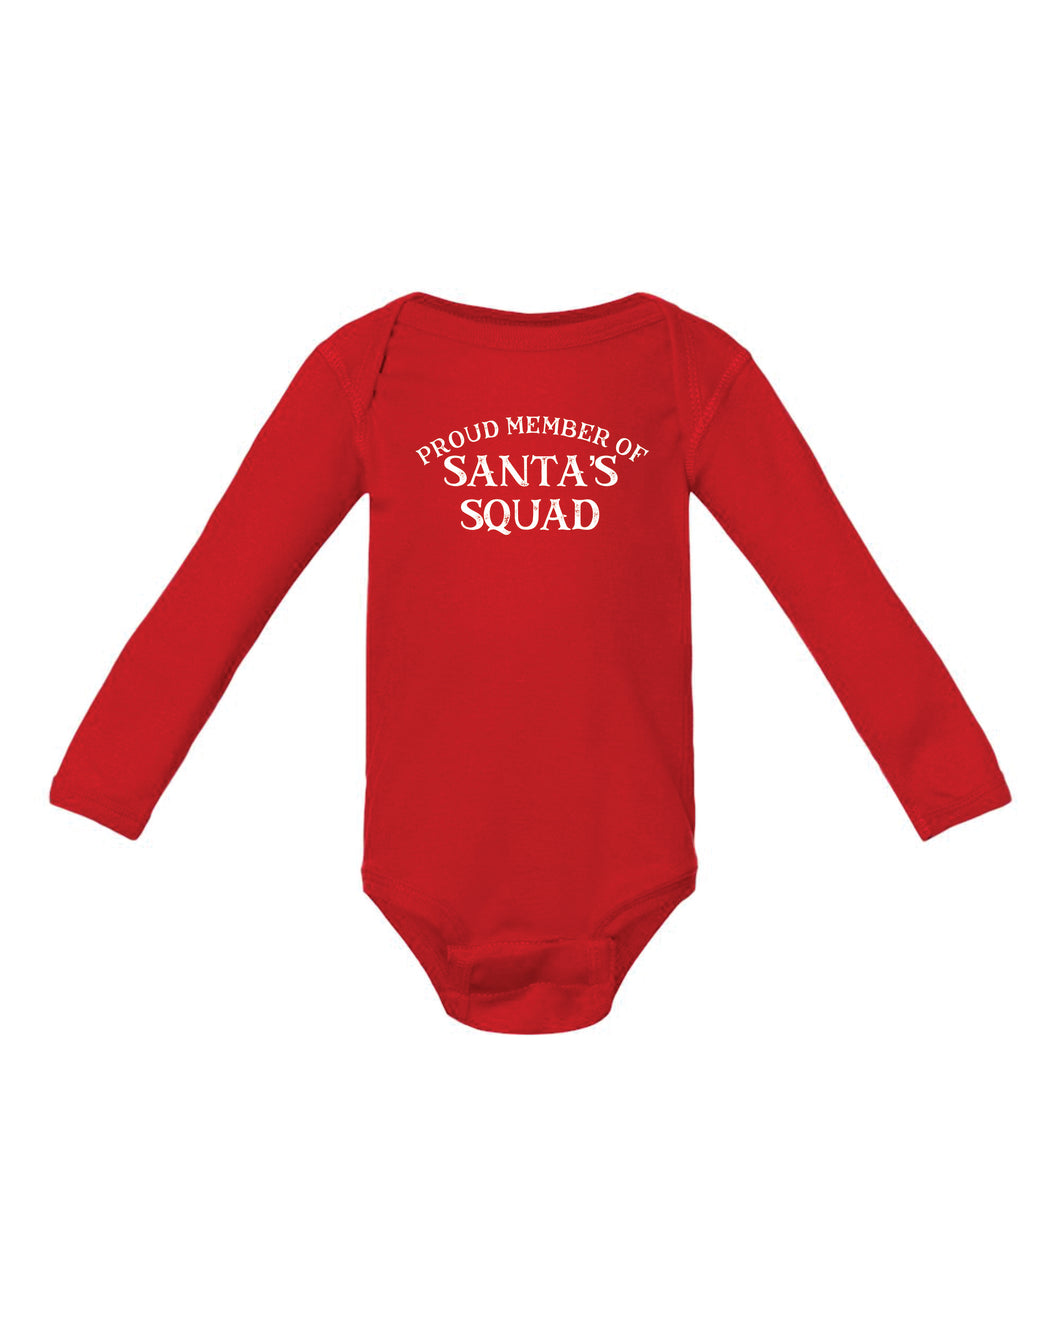 Santa's Squad | Infant Long Sleeve Bodysuit